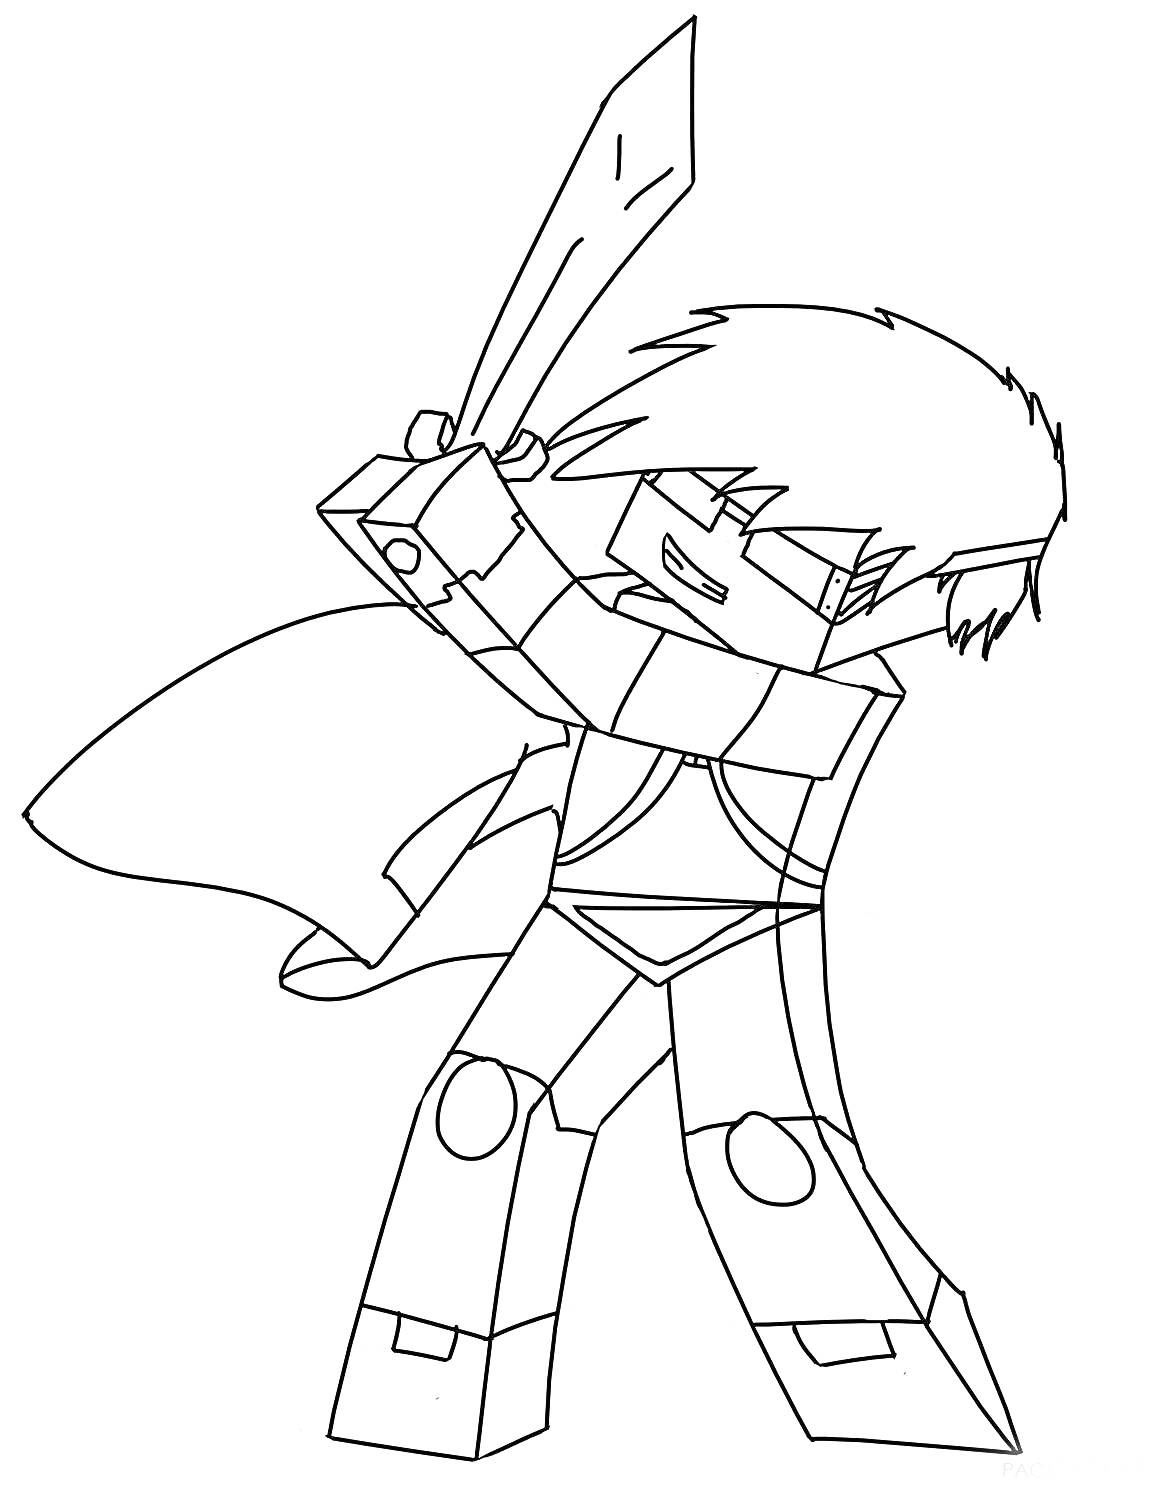 Раскраска Персонаж Майнкрафт с мечом в руке и плащом